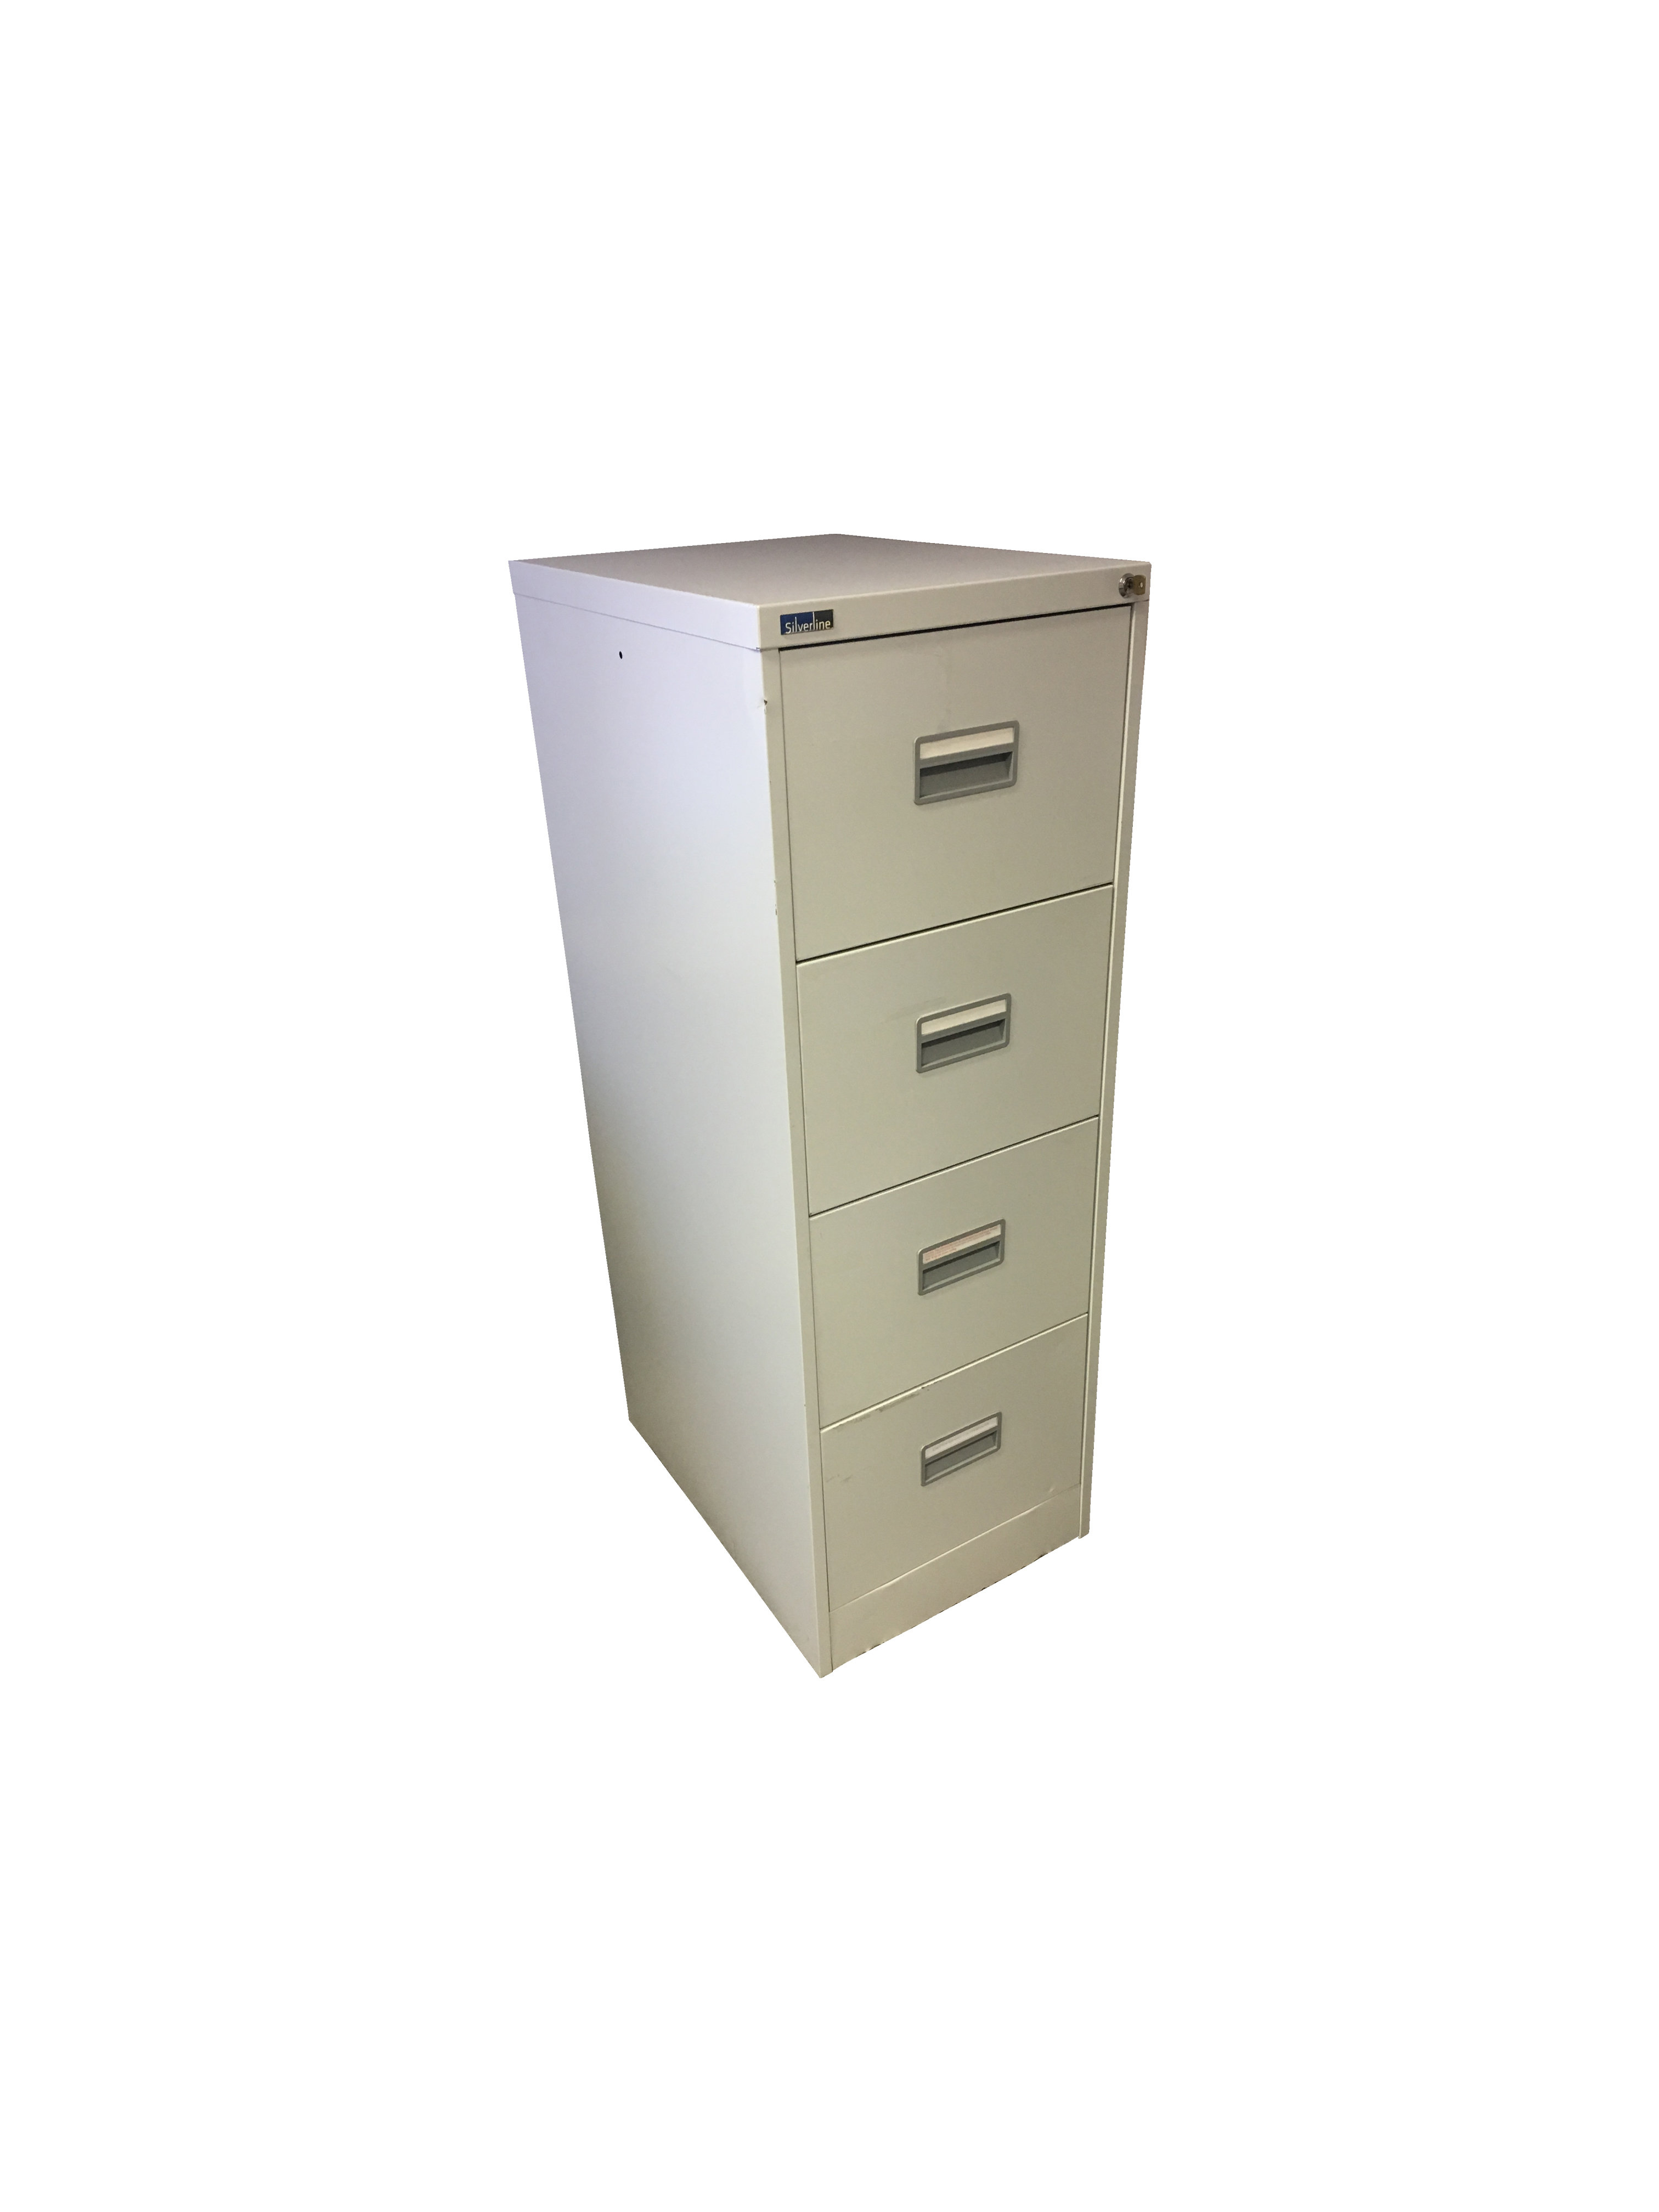 Silverline Office Filing Cabinet 4 Drawer Locking Storage In Light Grey Uofd within size 3024 X 4032